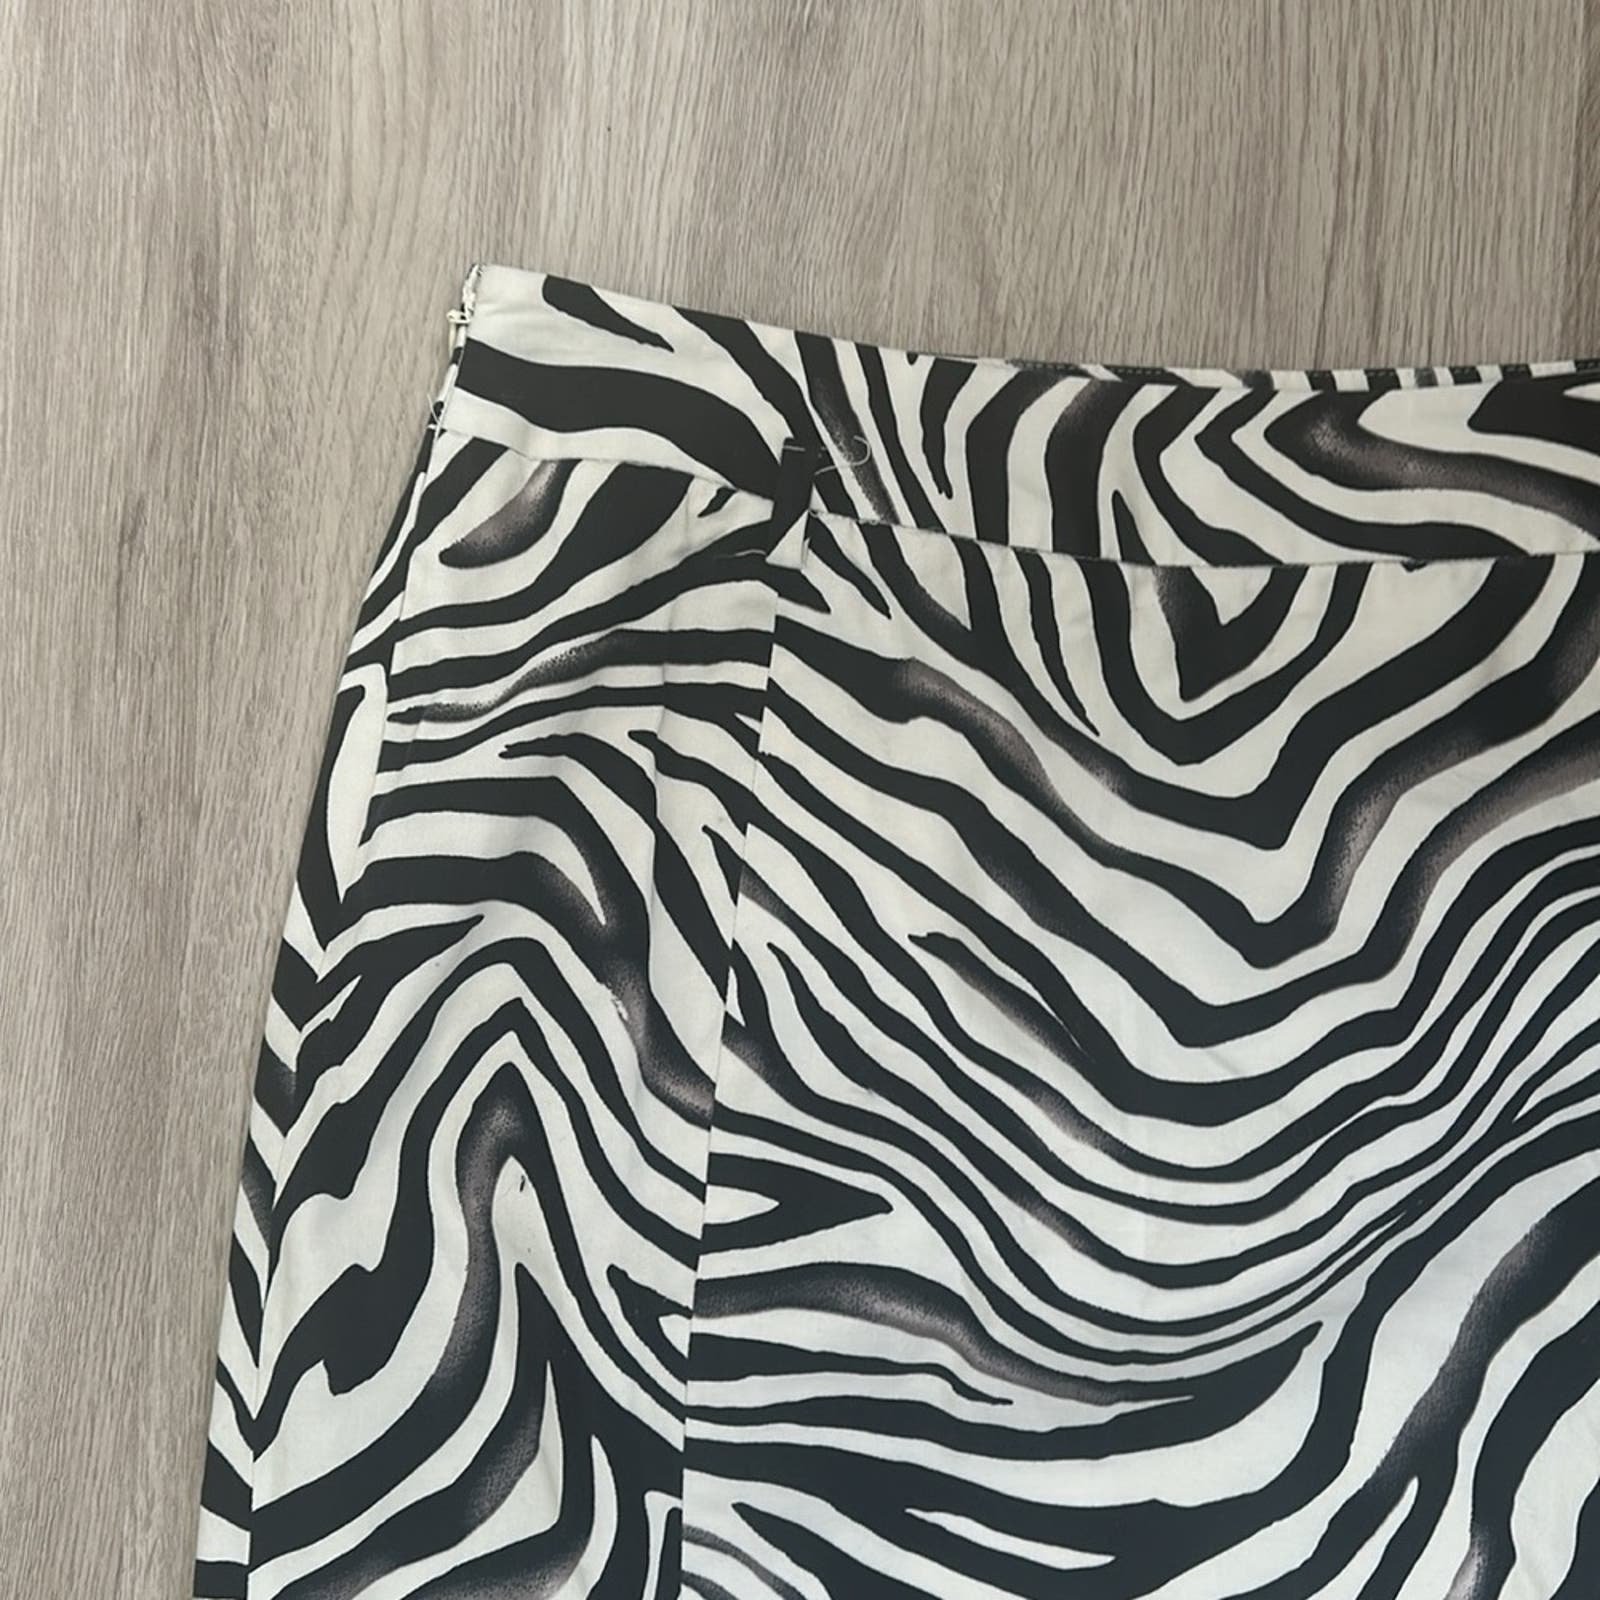 where to buy  Josephine chaus petite size 10p zebra print skirt JJVg2CTUh Online Exclusive